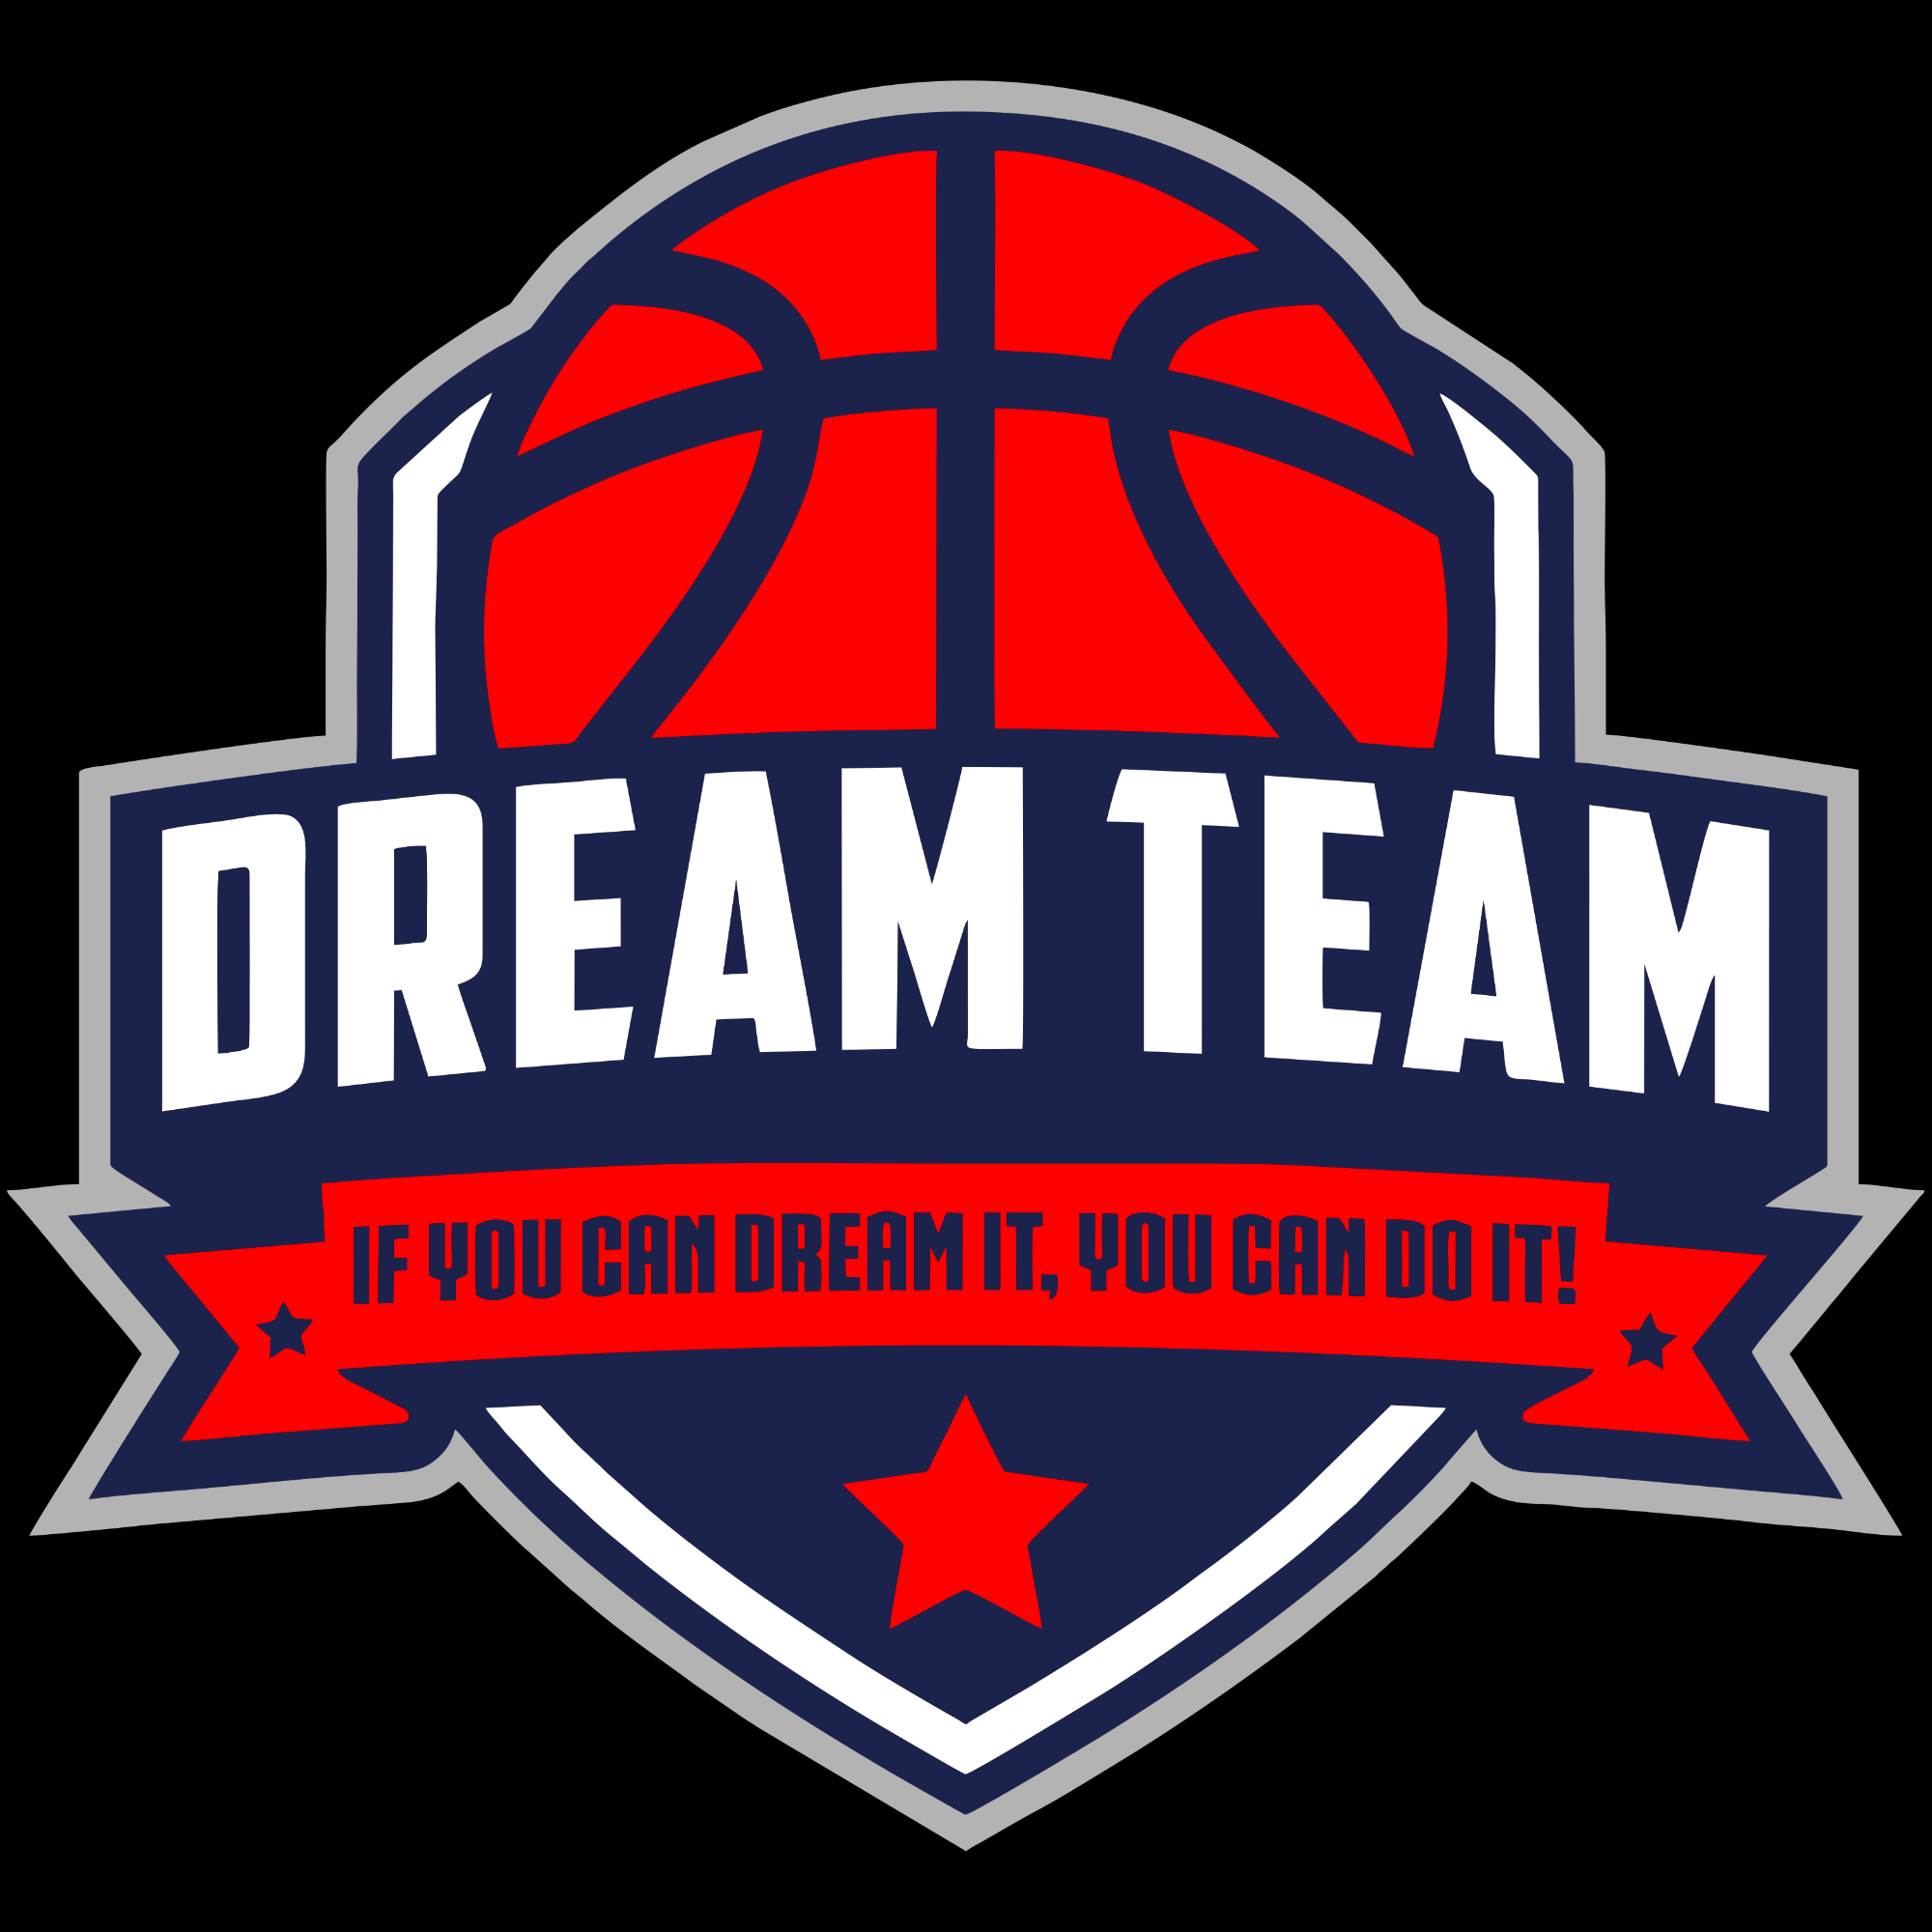 The official logo of Dream Team (Antioch)